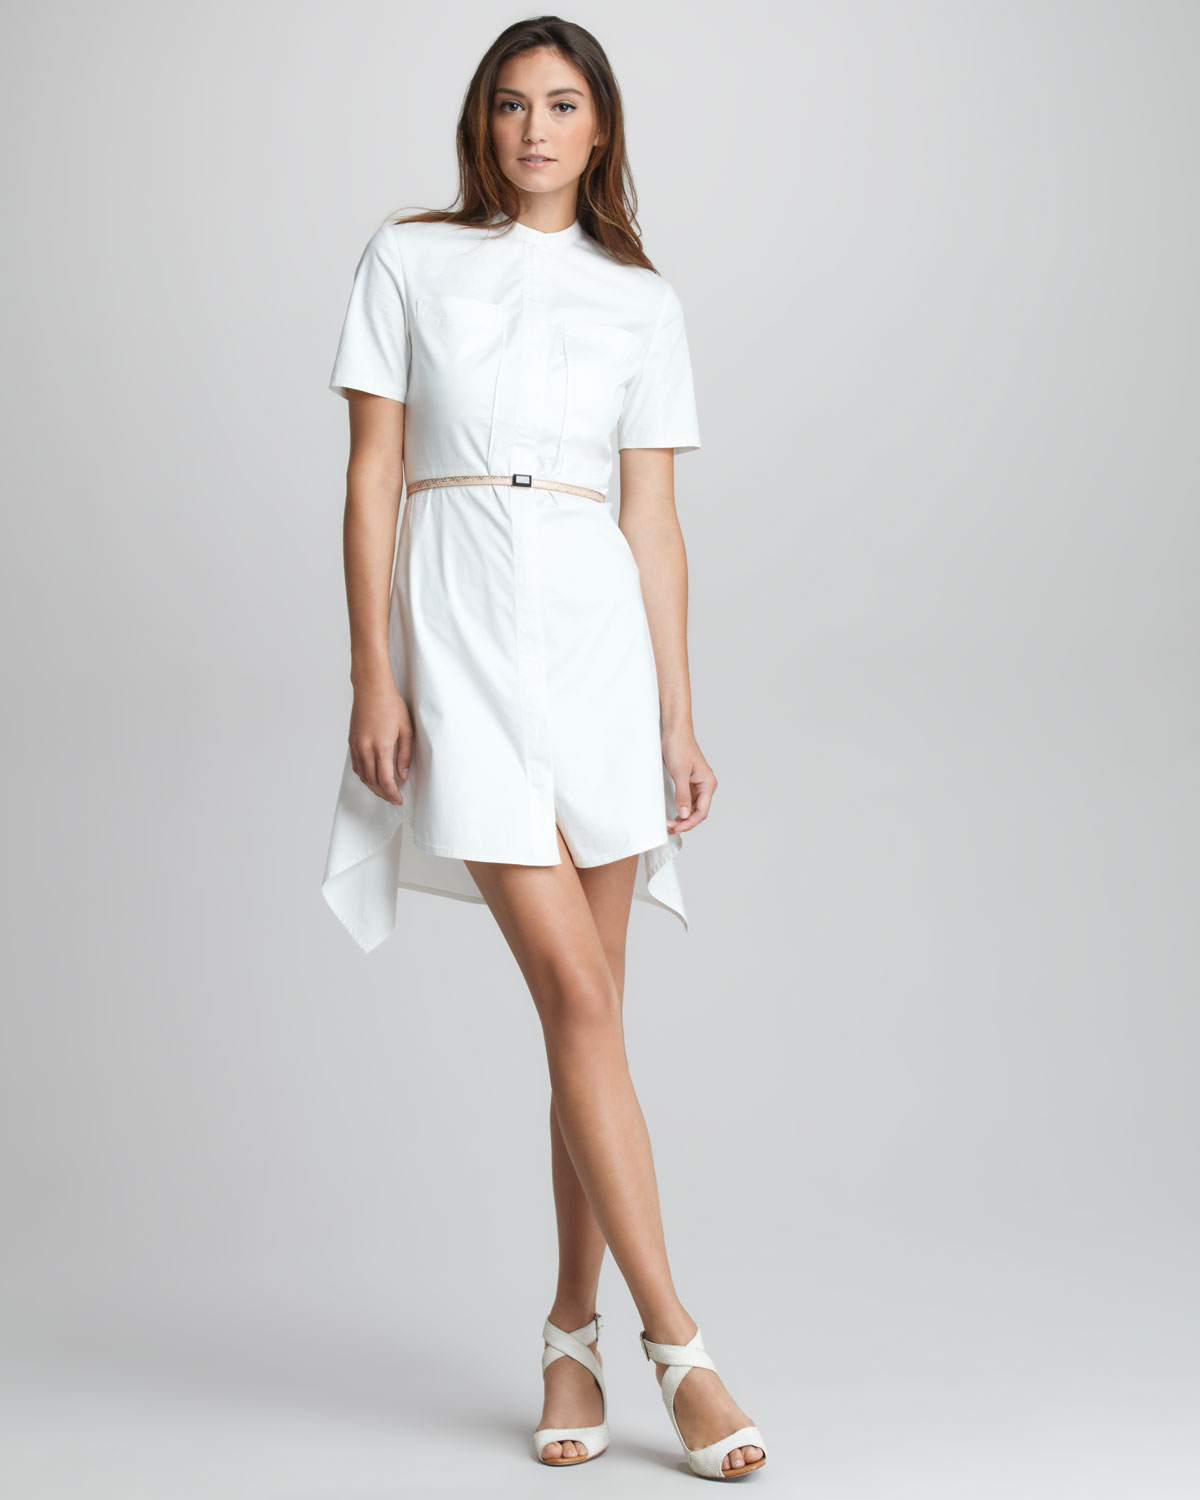 Lyst - 3.1 Phillip Lim Flirt Pintucked Cotton Dress in White